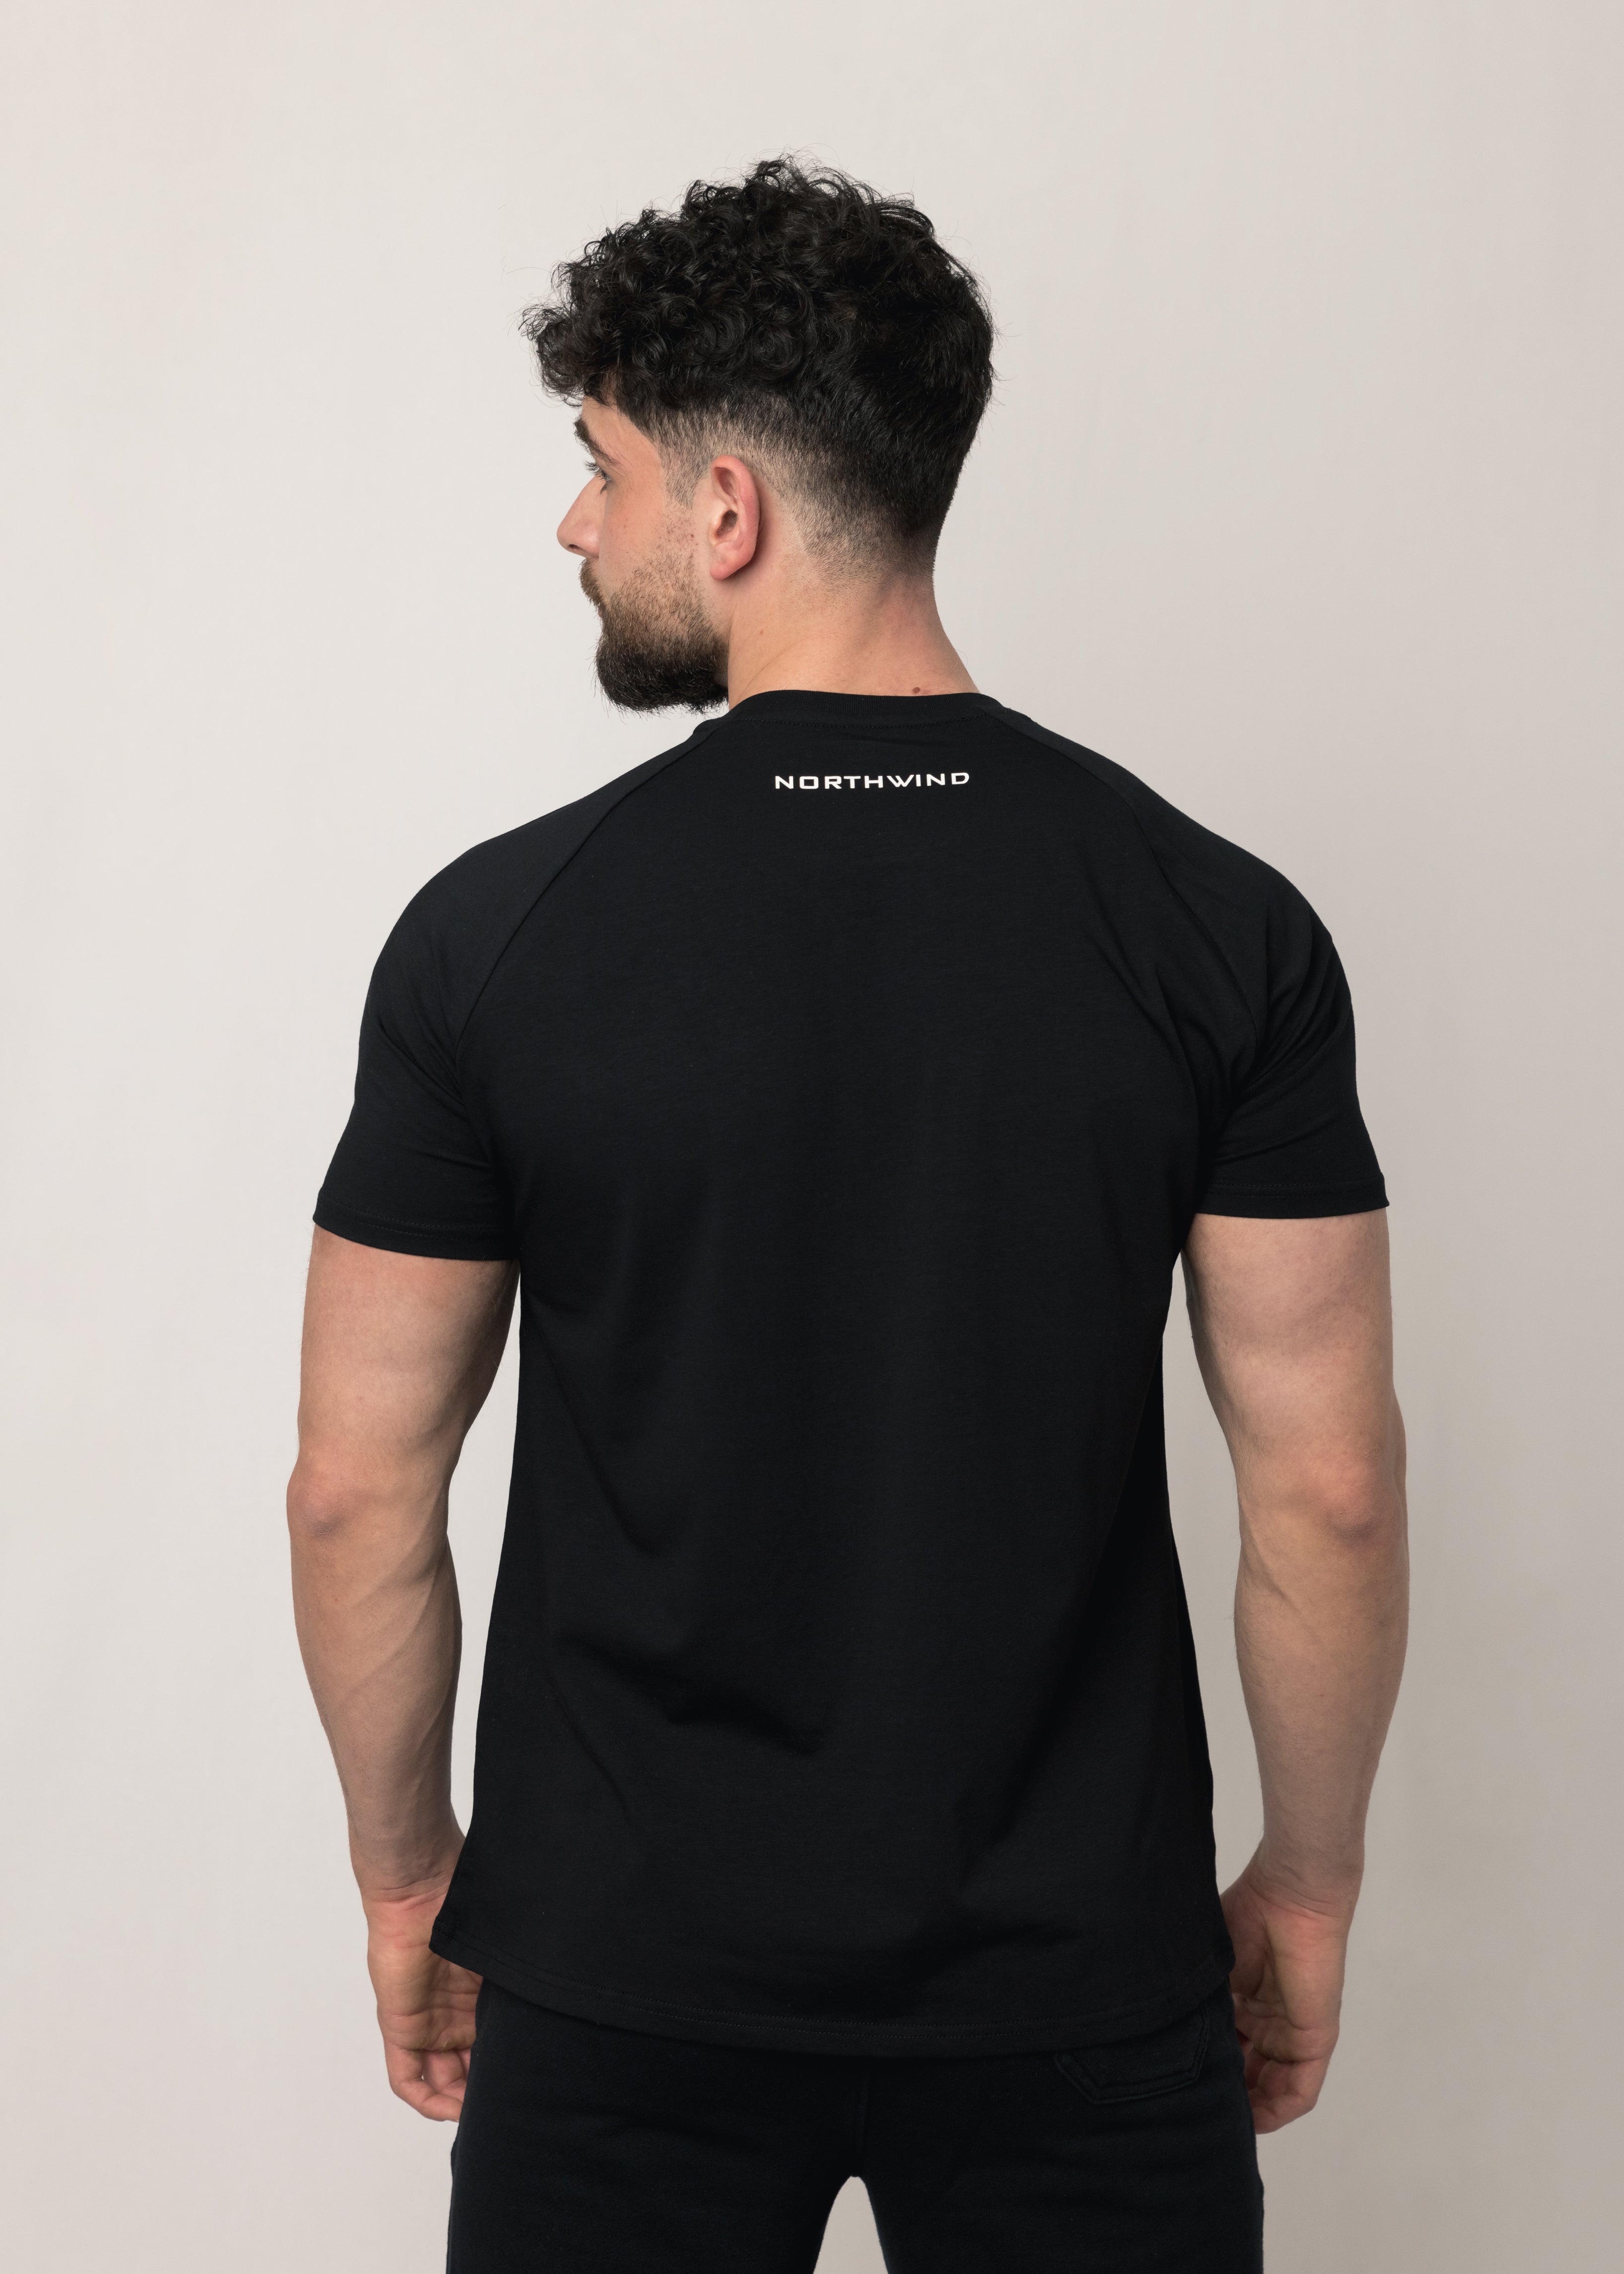 Performance Activewear Black T-shirt